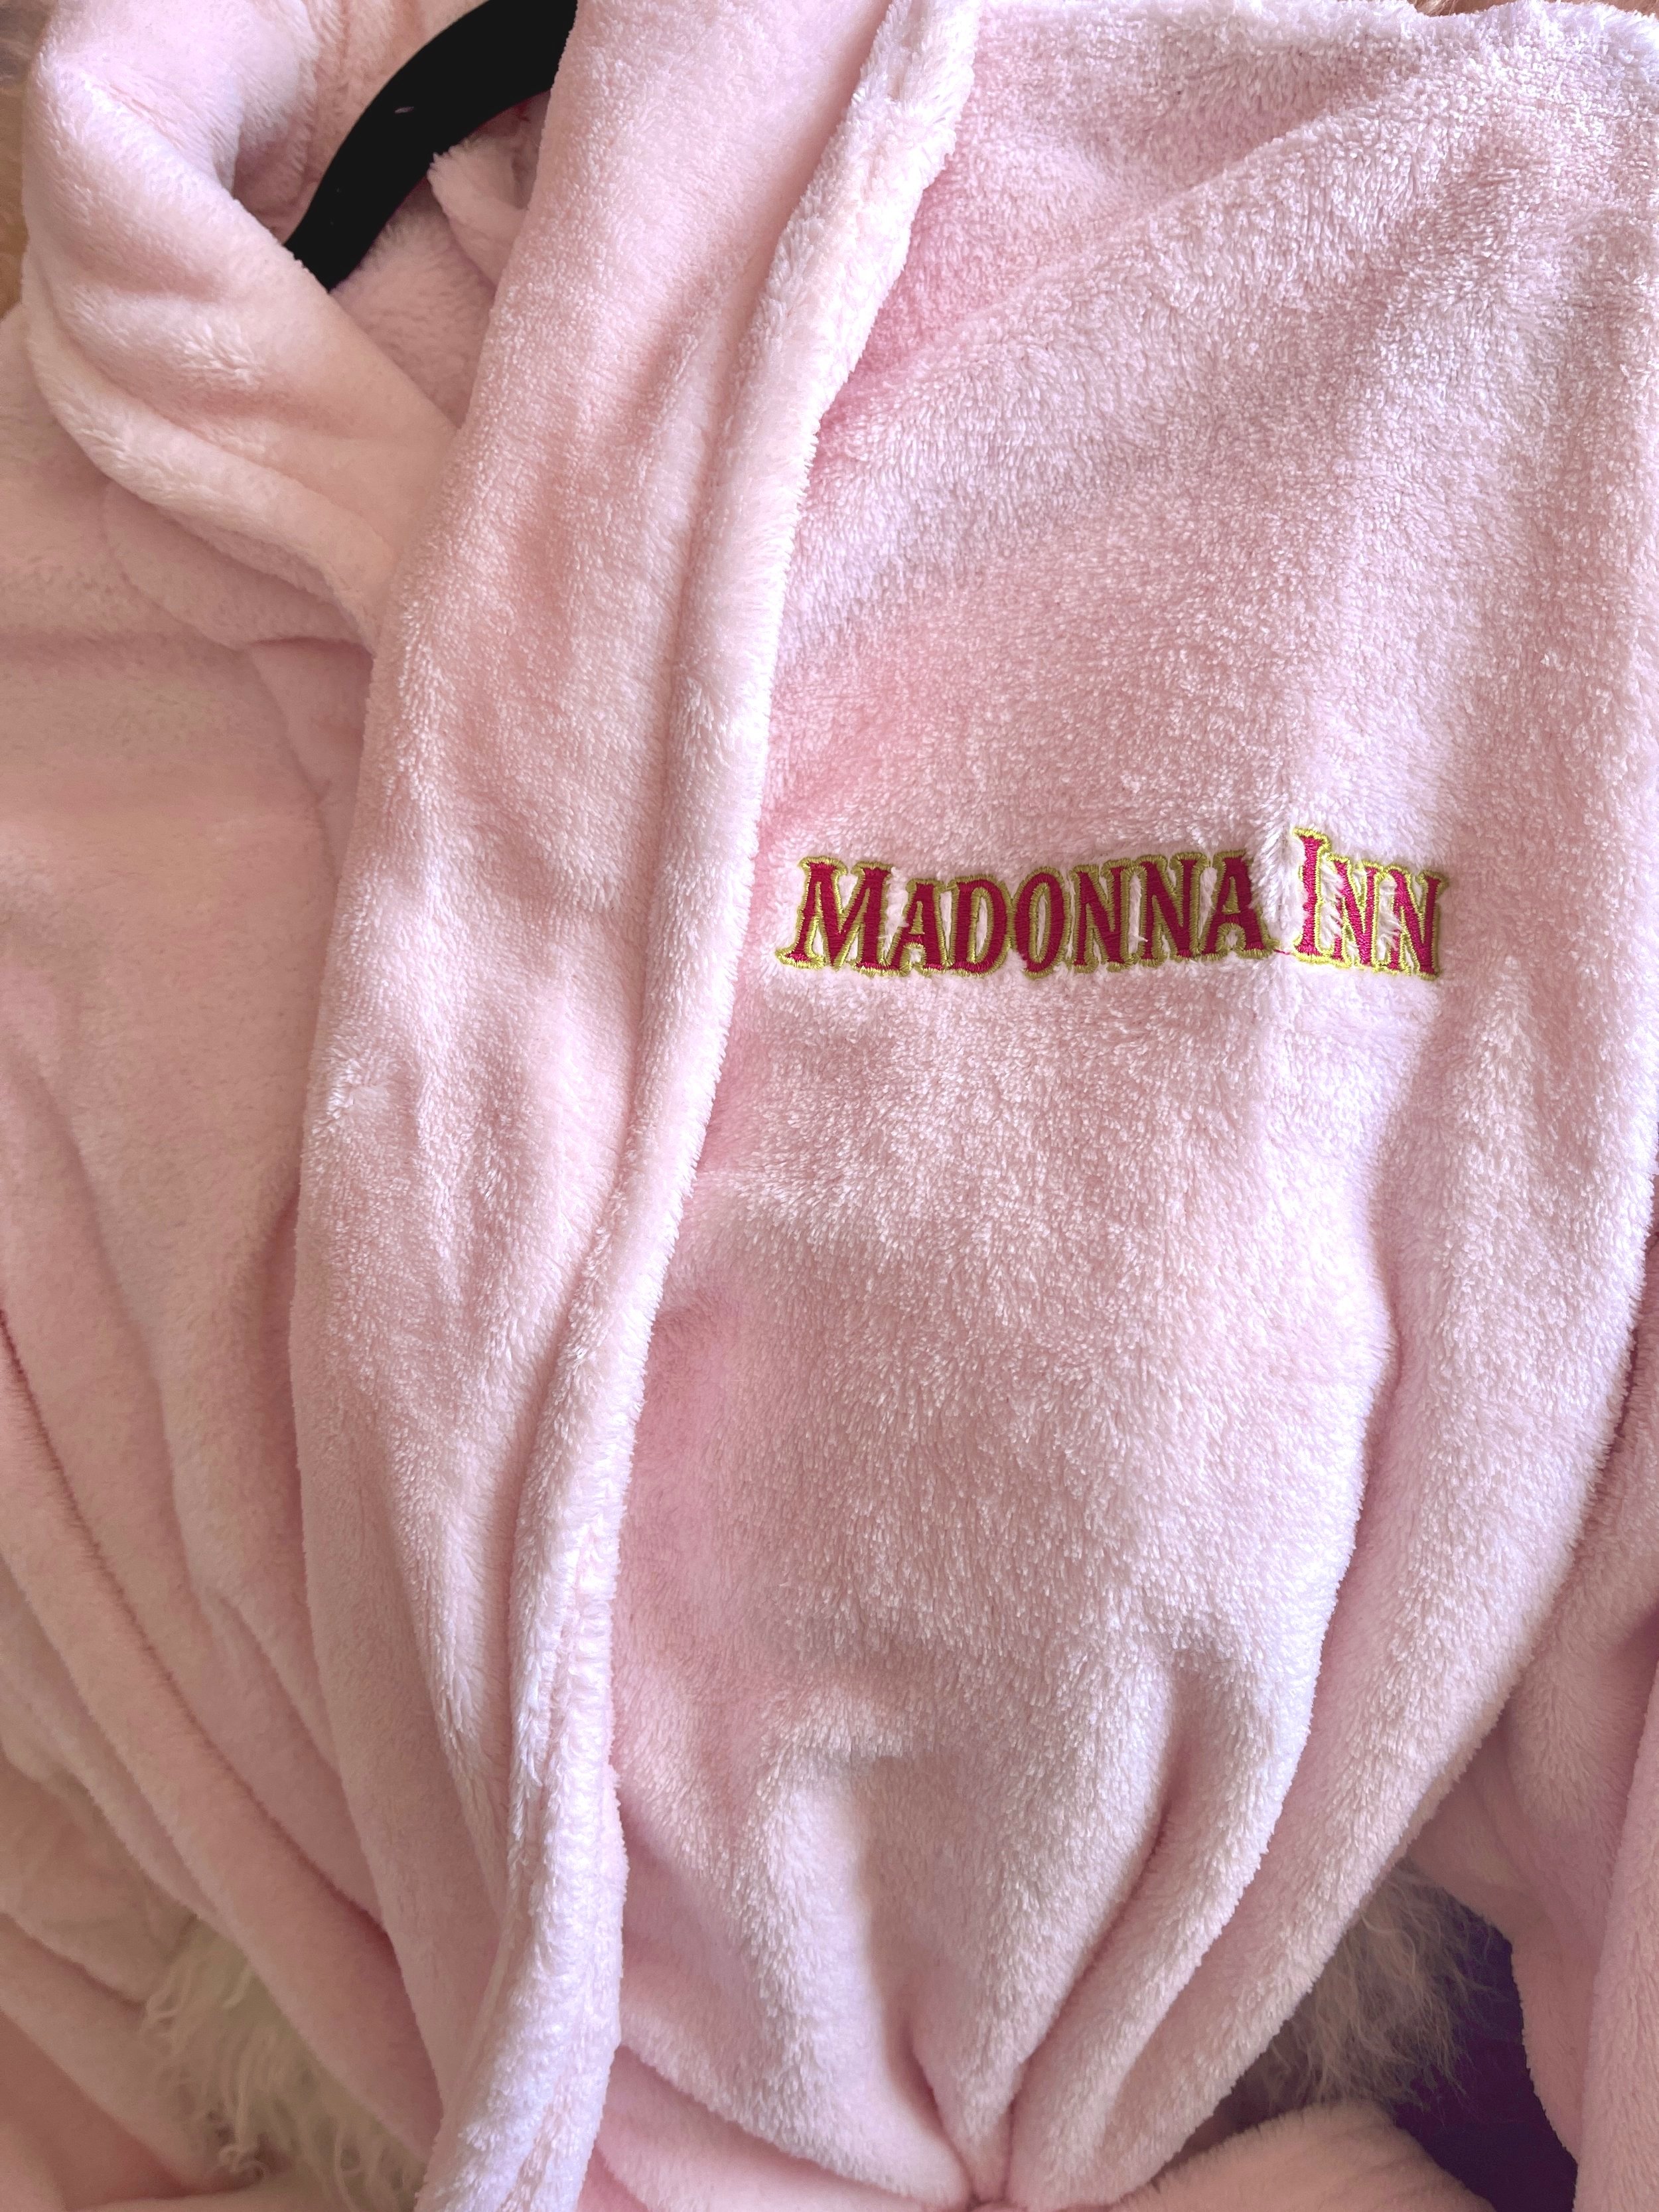 Robe from Madonna Inn